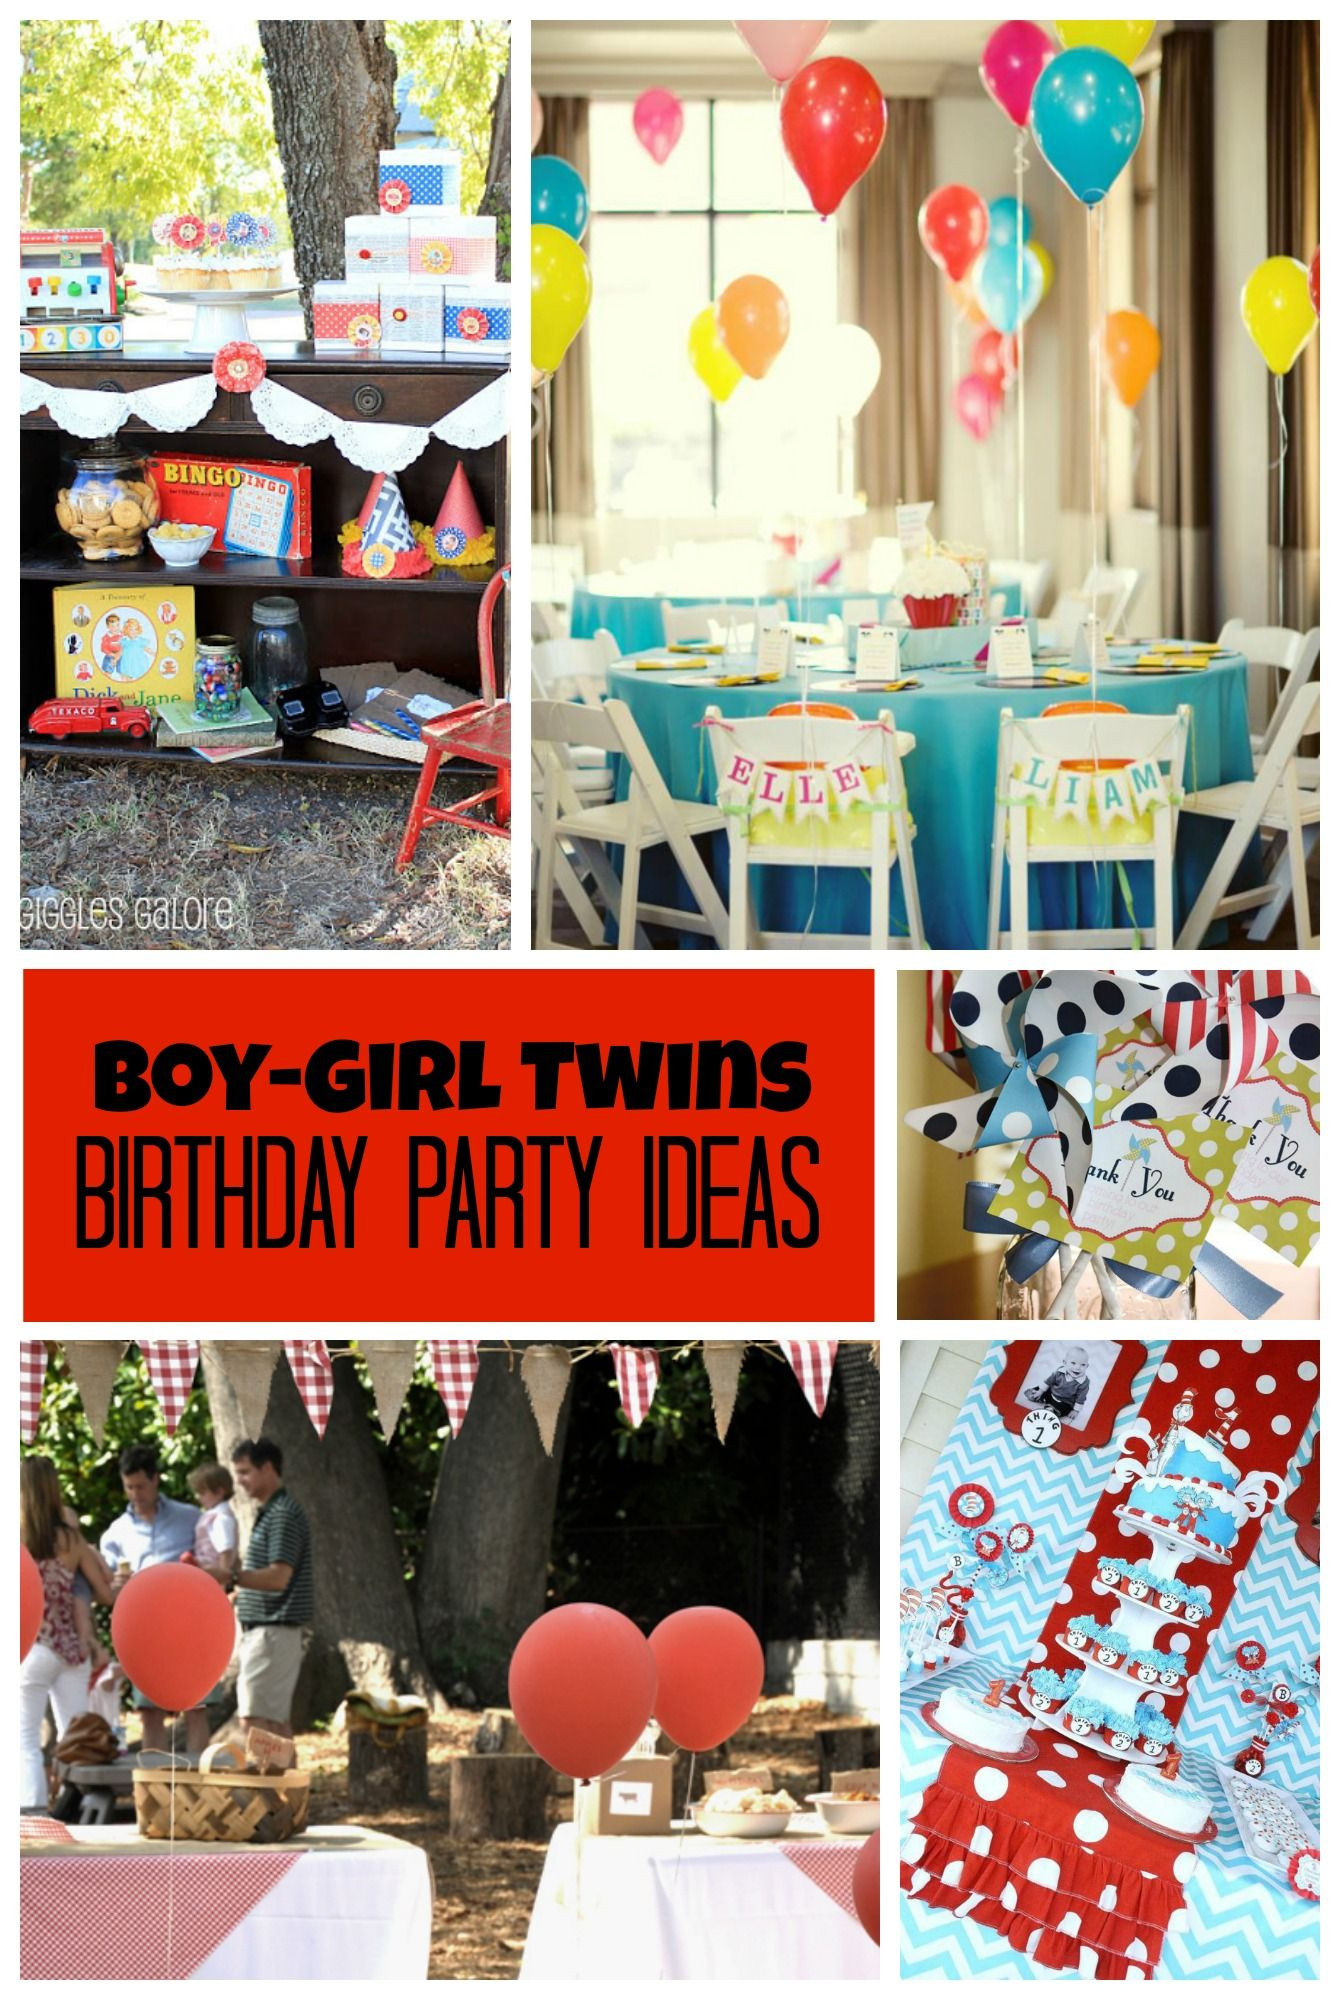 Boy Themed Birthday Party Ideas
 Birthday Party Ideas for Boy Girl Twins